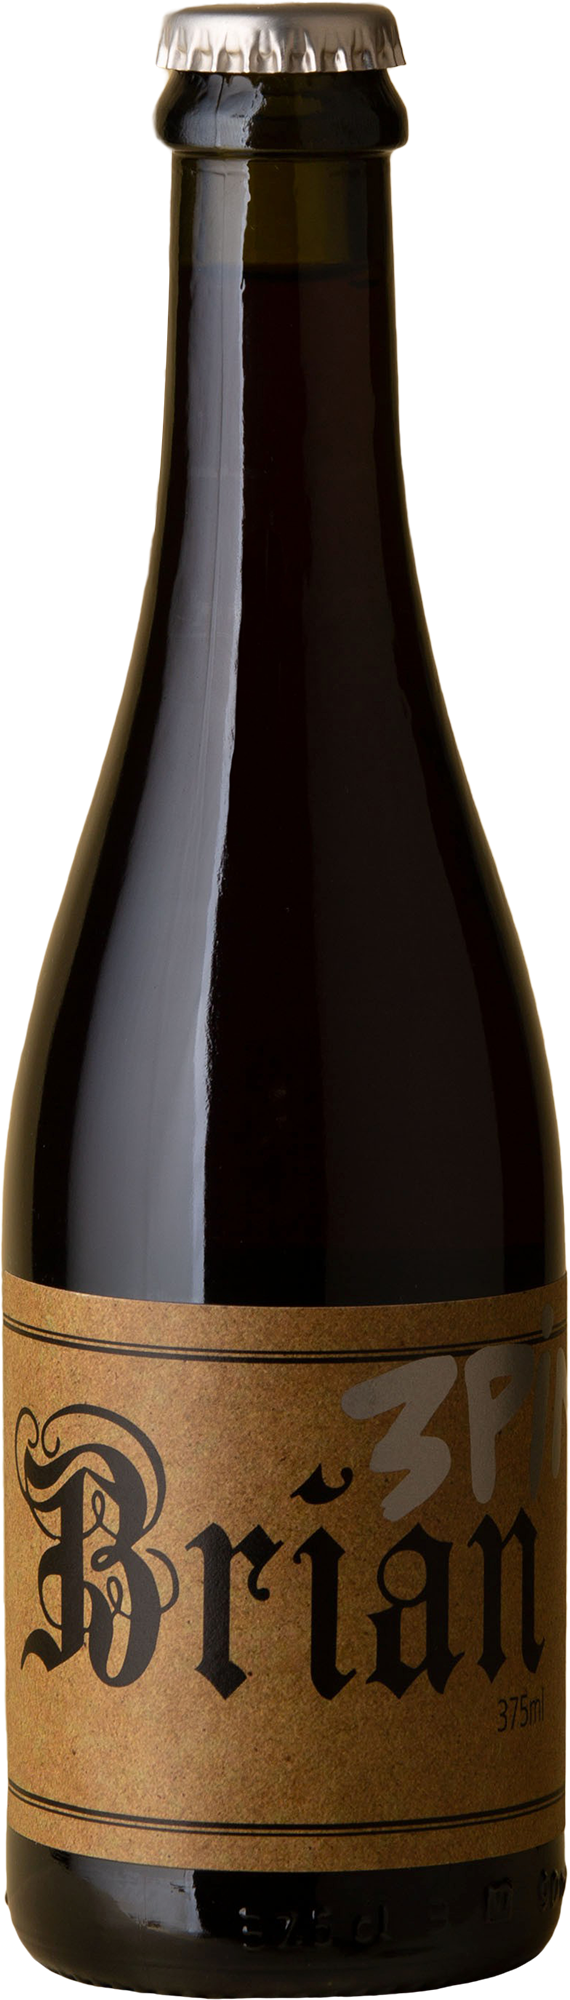 Brian Wines - 3 Pinots Blend 2018 (375ml) Red Wine